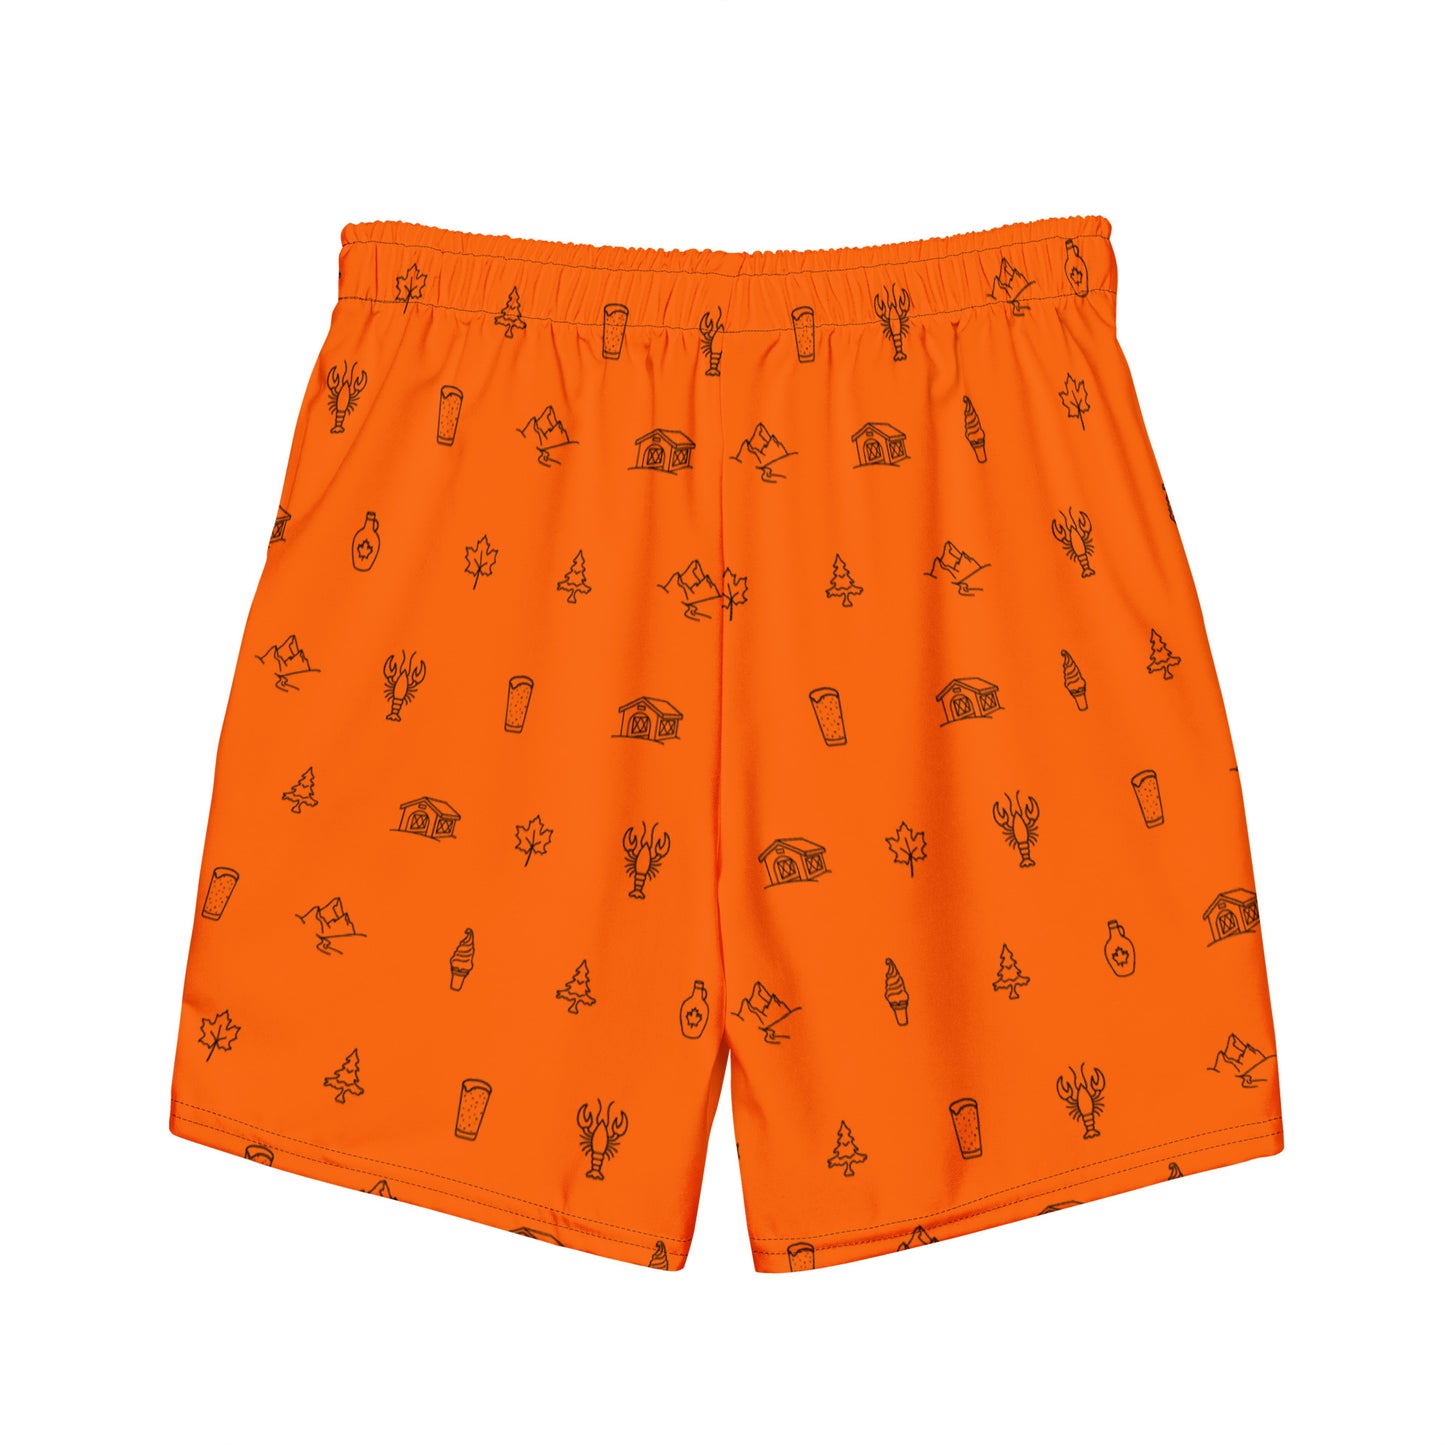 NEAF Icon Swim Trunks - Orange